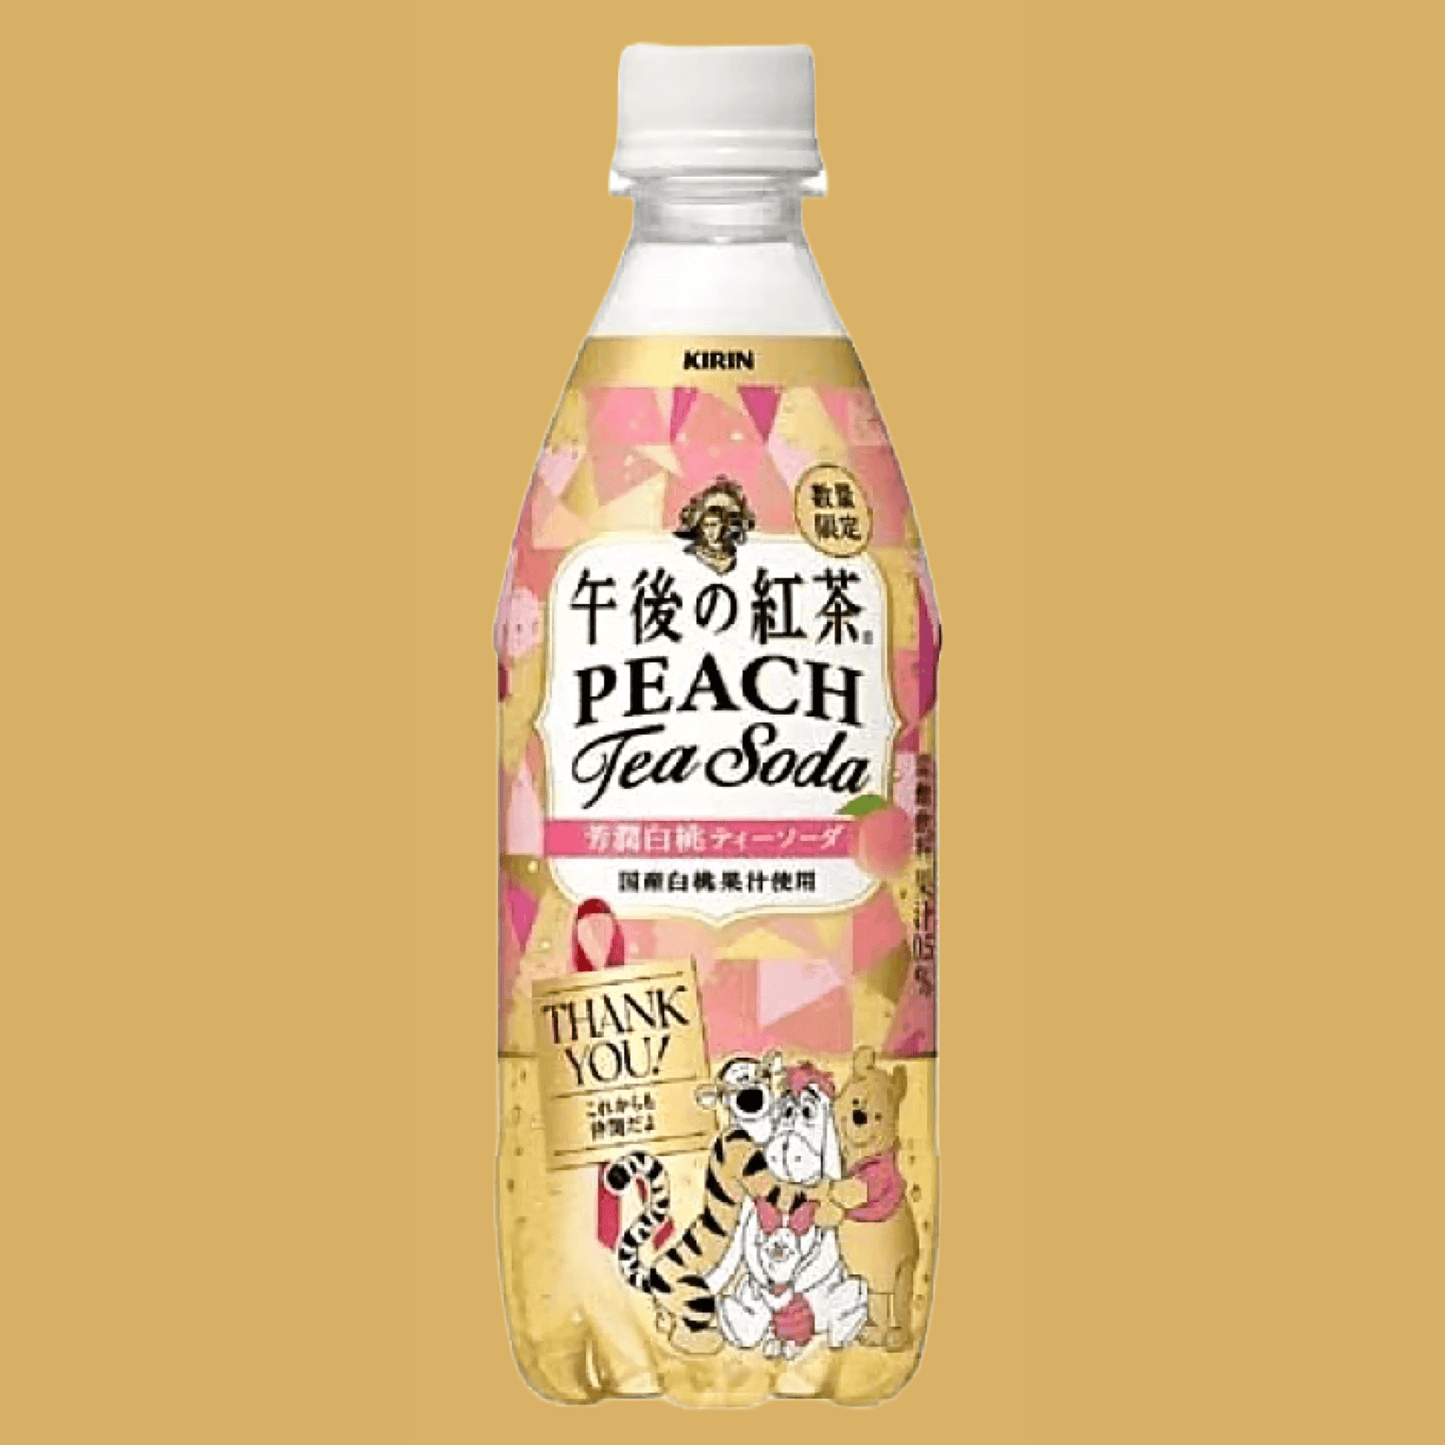 Kirin White Peach Tea Soda(500ml) - The Snacks Box - Asian Snacks Store - The Snacks Box - Korean Snack - Japanese Snack